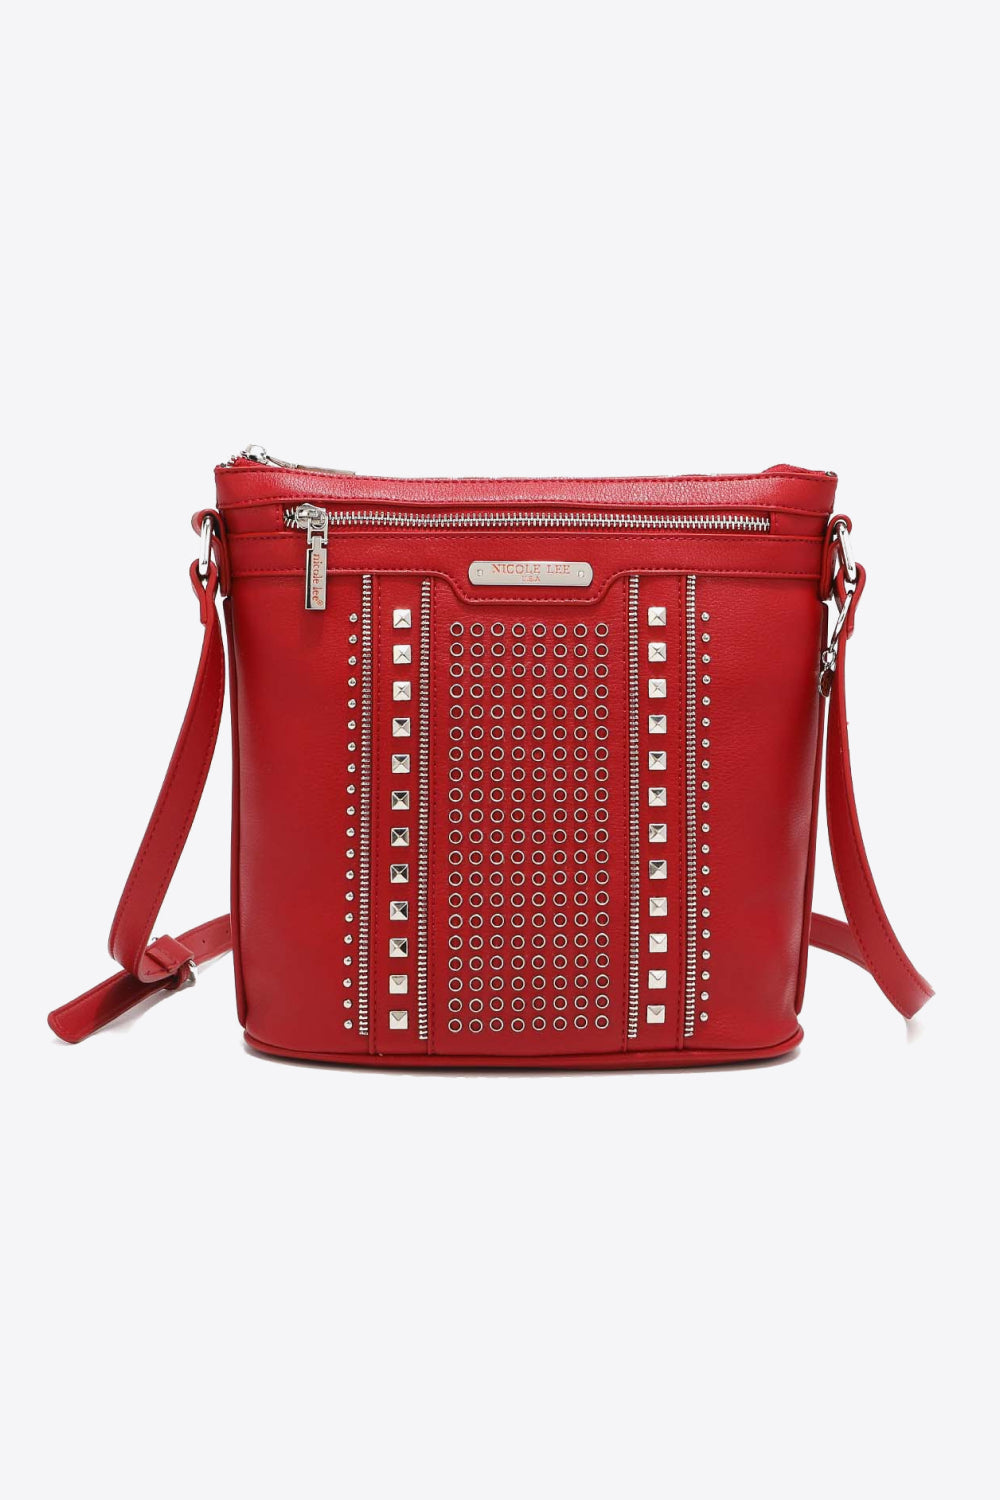 Nicole Lee USA Love Handbag-Trendsi-Red-One Size-[option4]-[option5]-[option6]-[option7]-[option8]-Shop-Boutique-Clothing-for-Women-Online